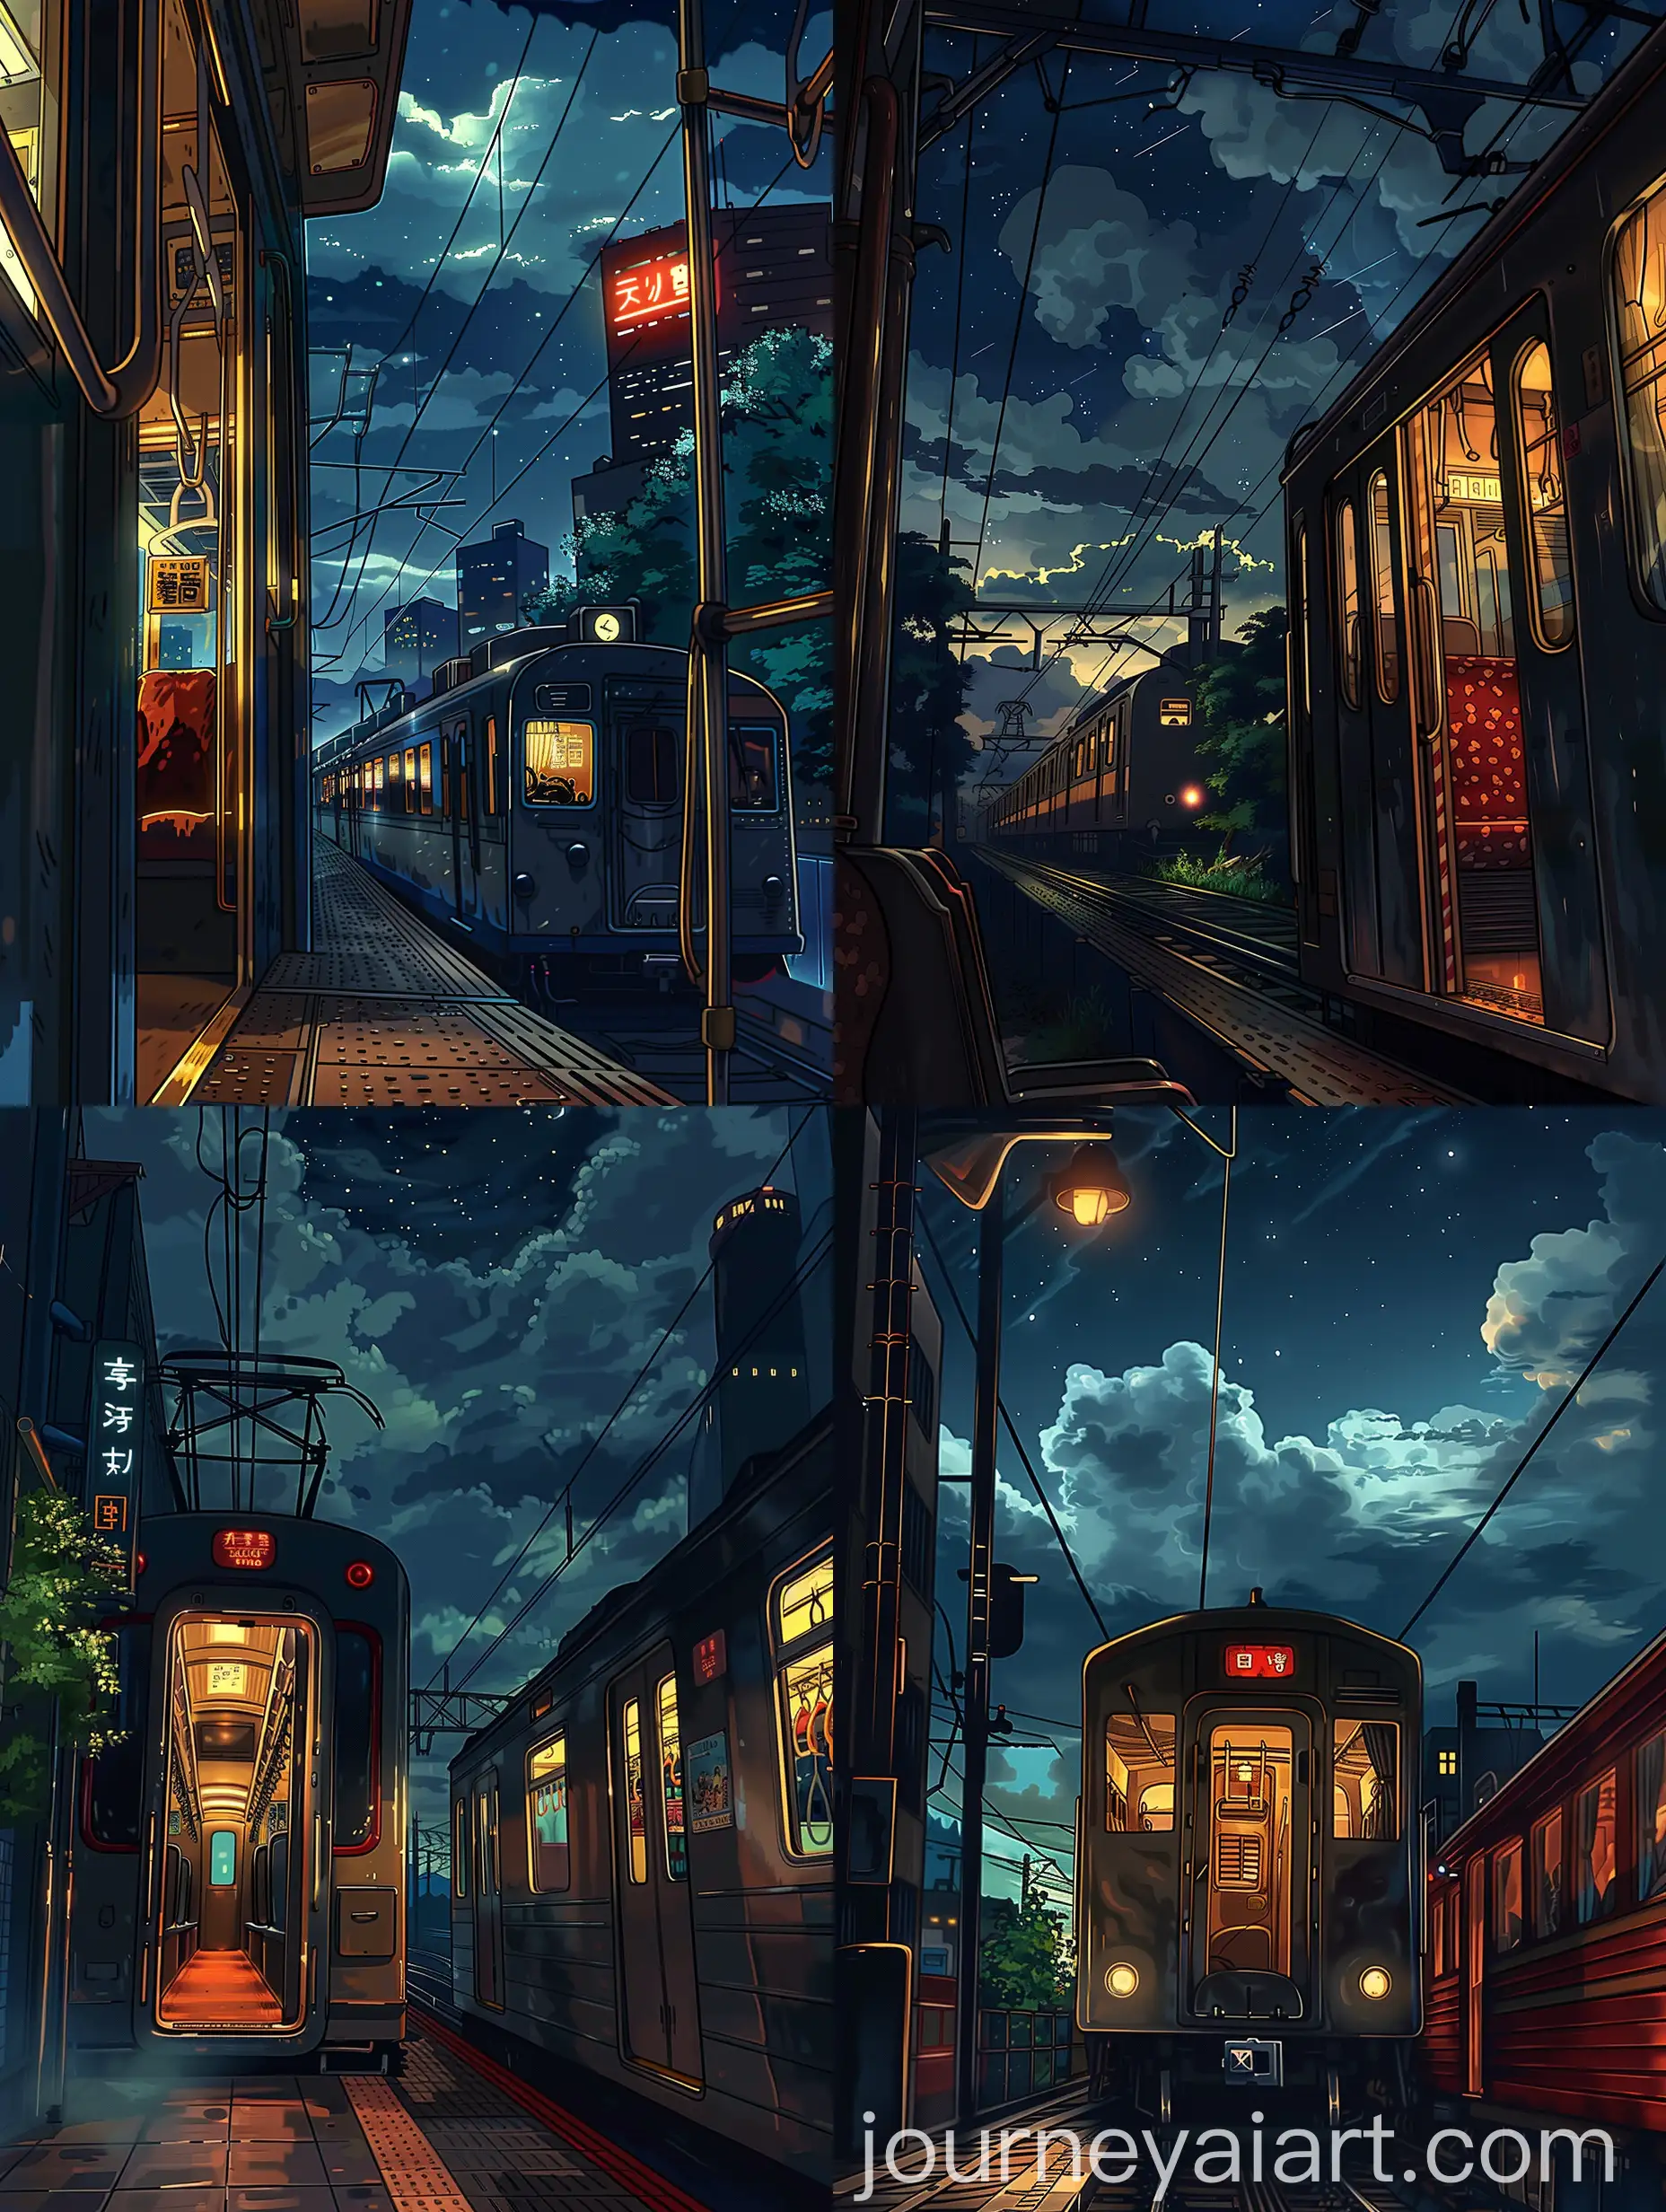 Studio-Ghibli-Inspired-Nighttime-Train-Journey-Digital-Art